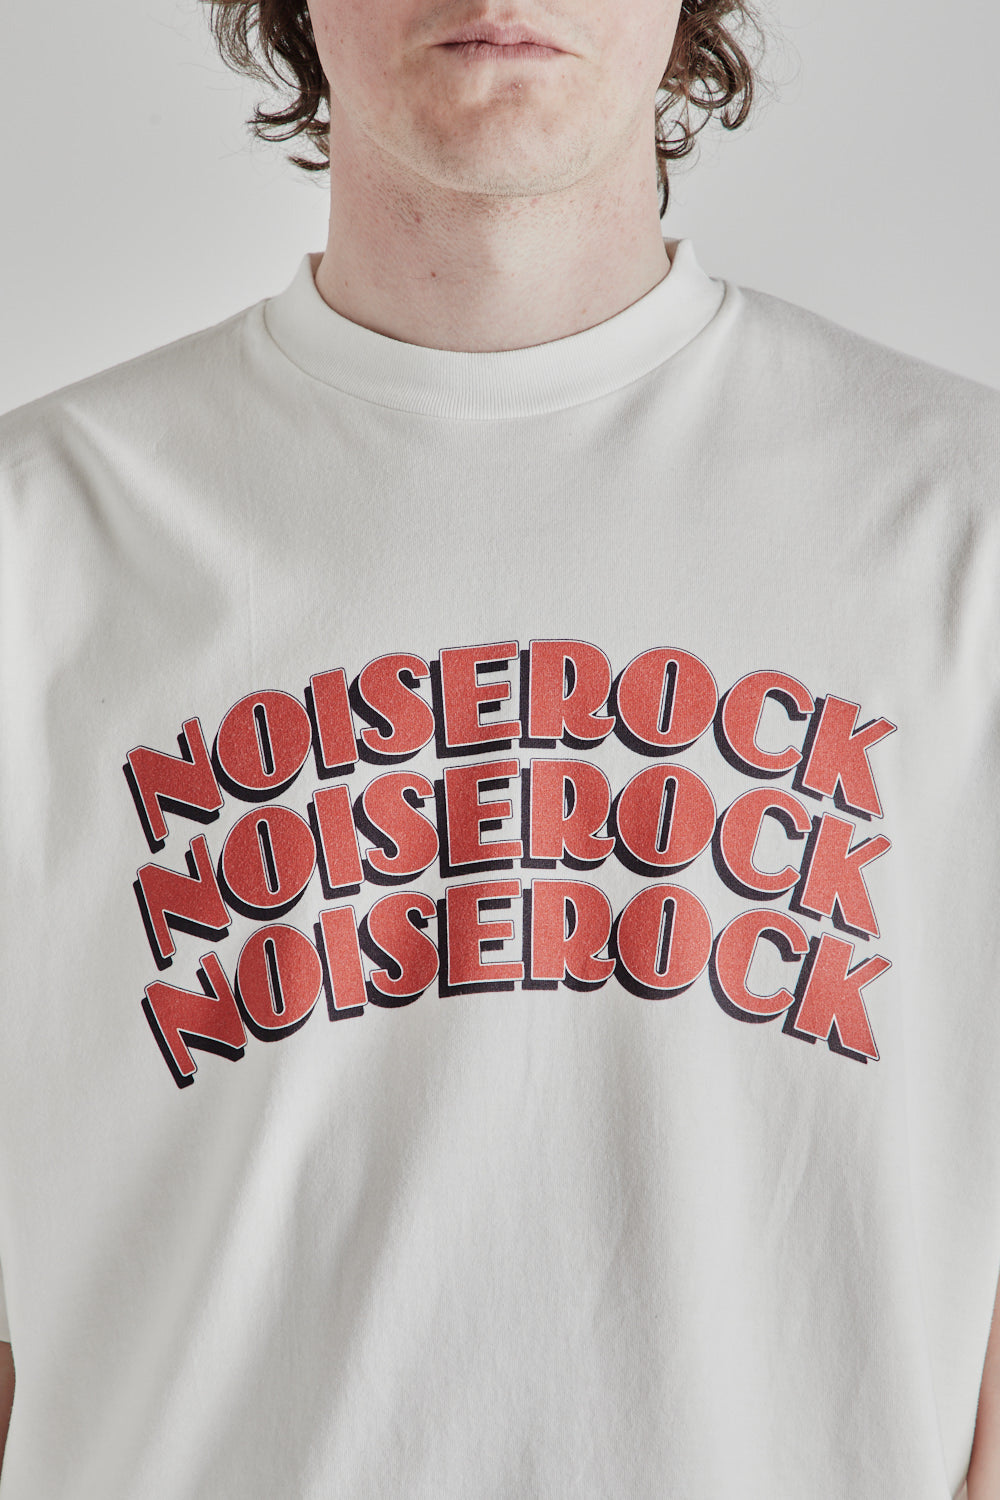 Noise Rock Print Wide Tee - White